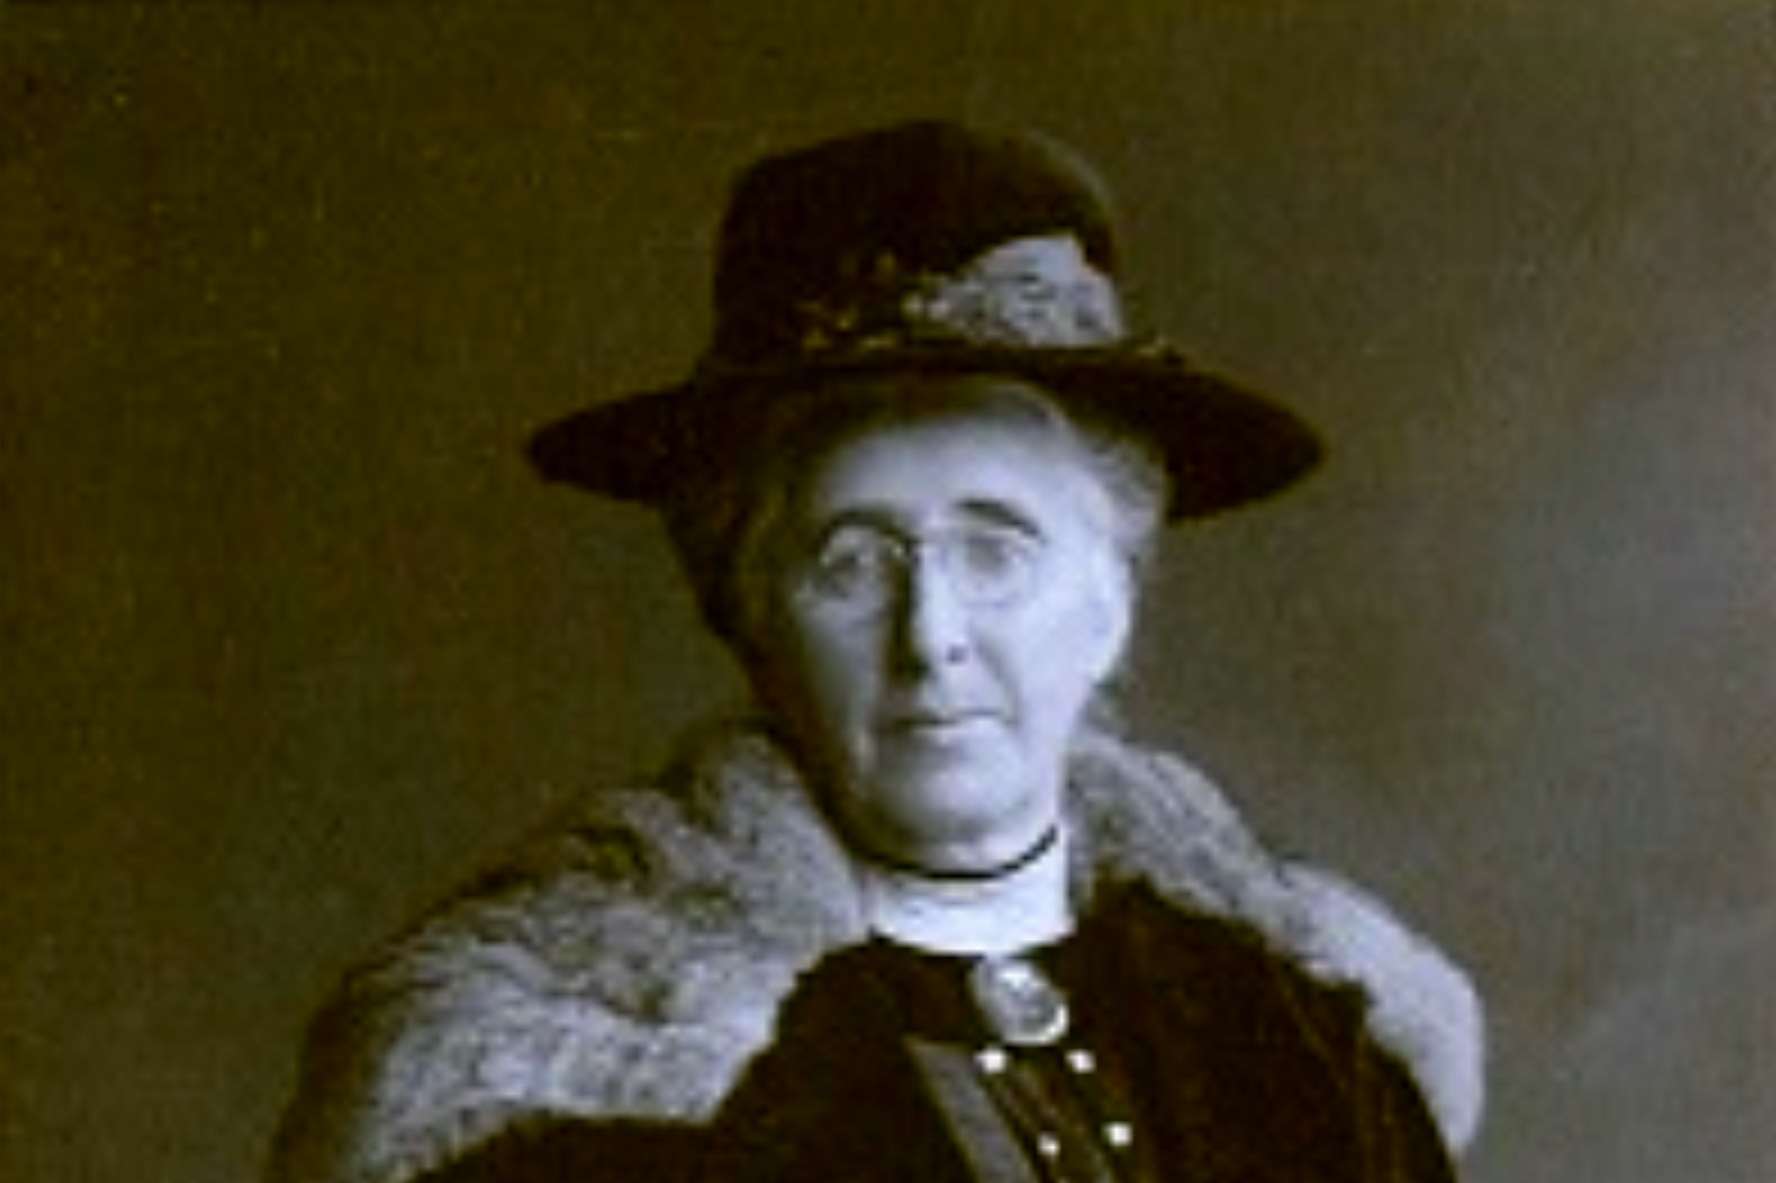 Suffragette and social reformer Amelia Scott